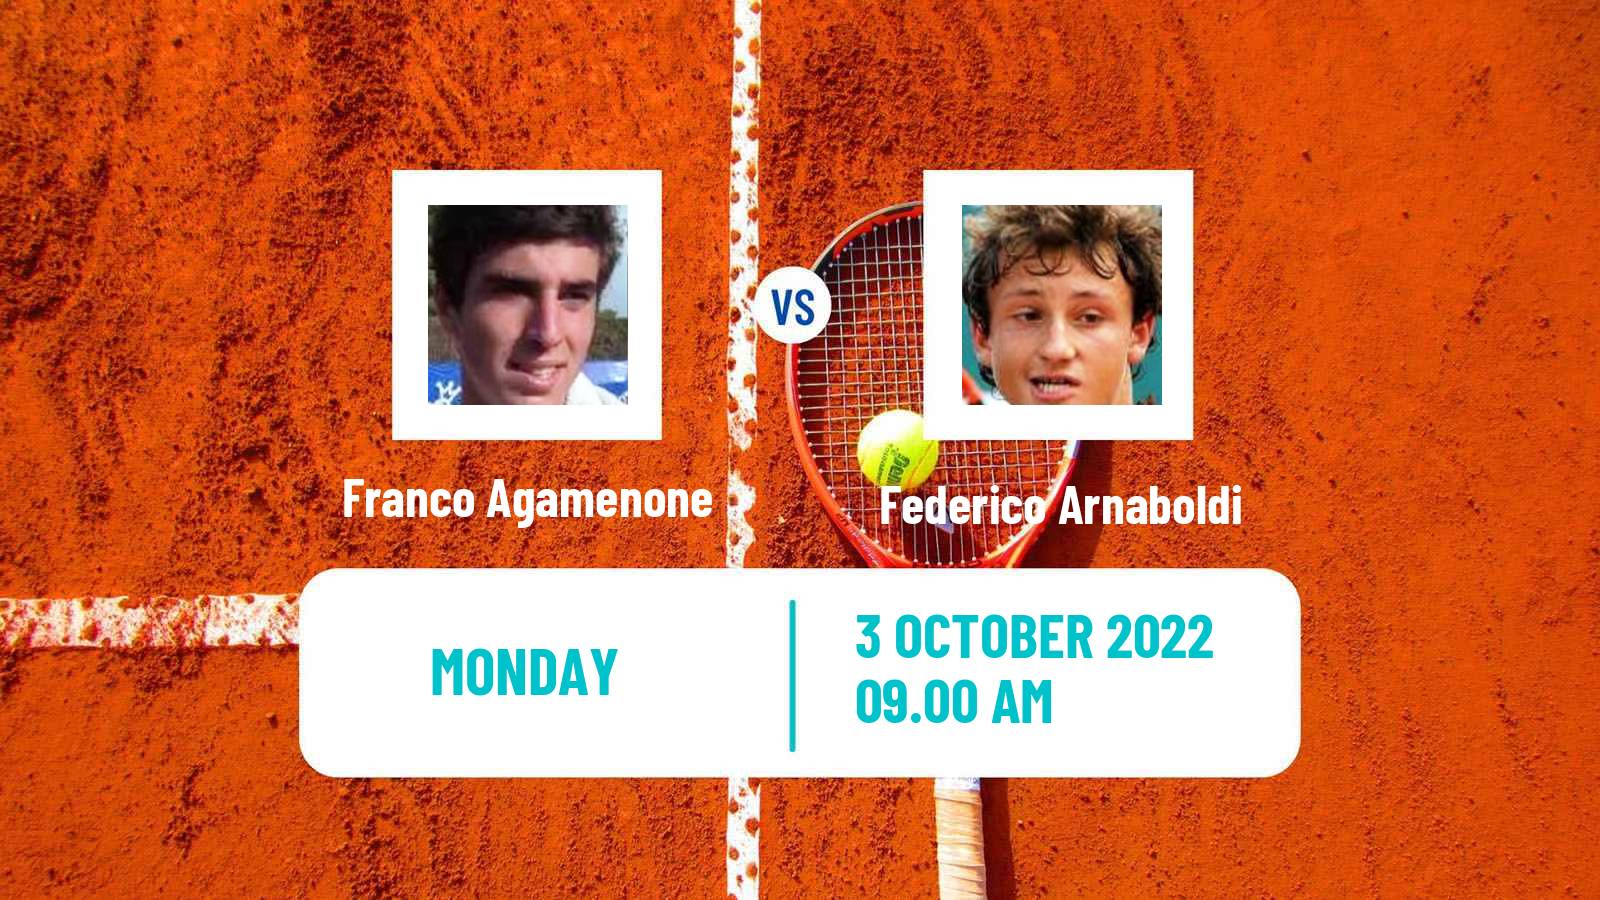 Tennis ATP Challenger Franco Agamenone - Federico Arnaboldi